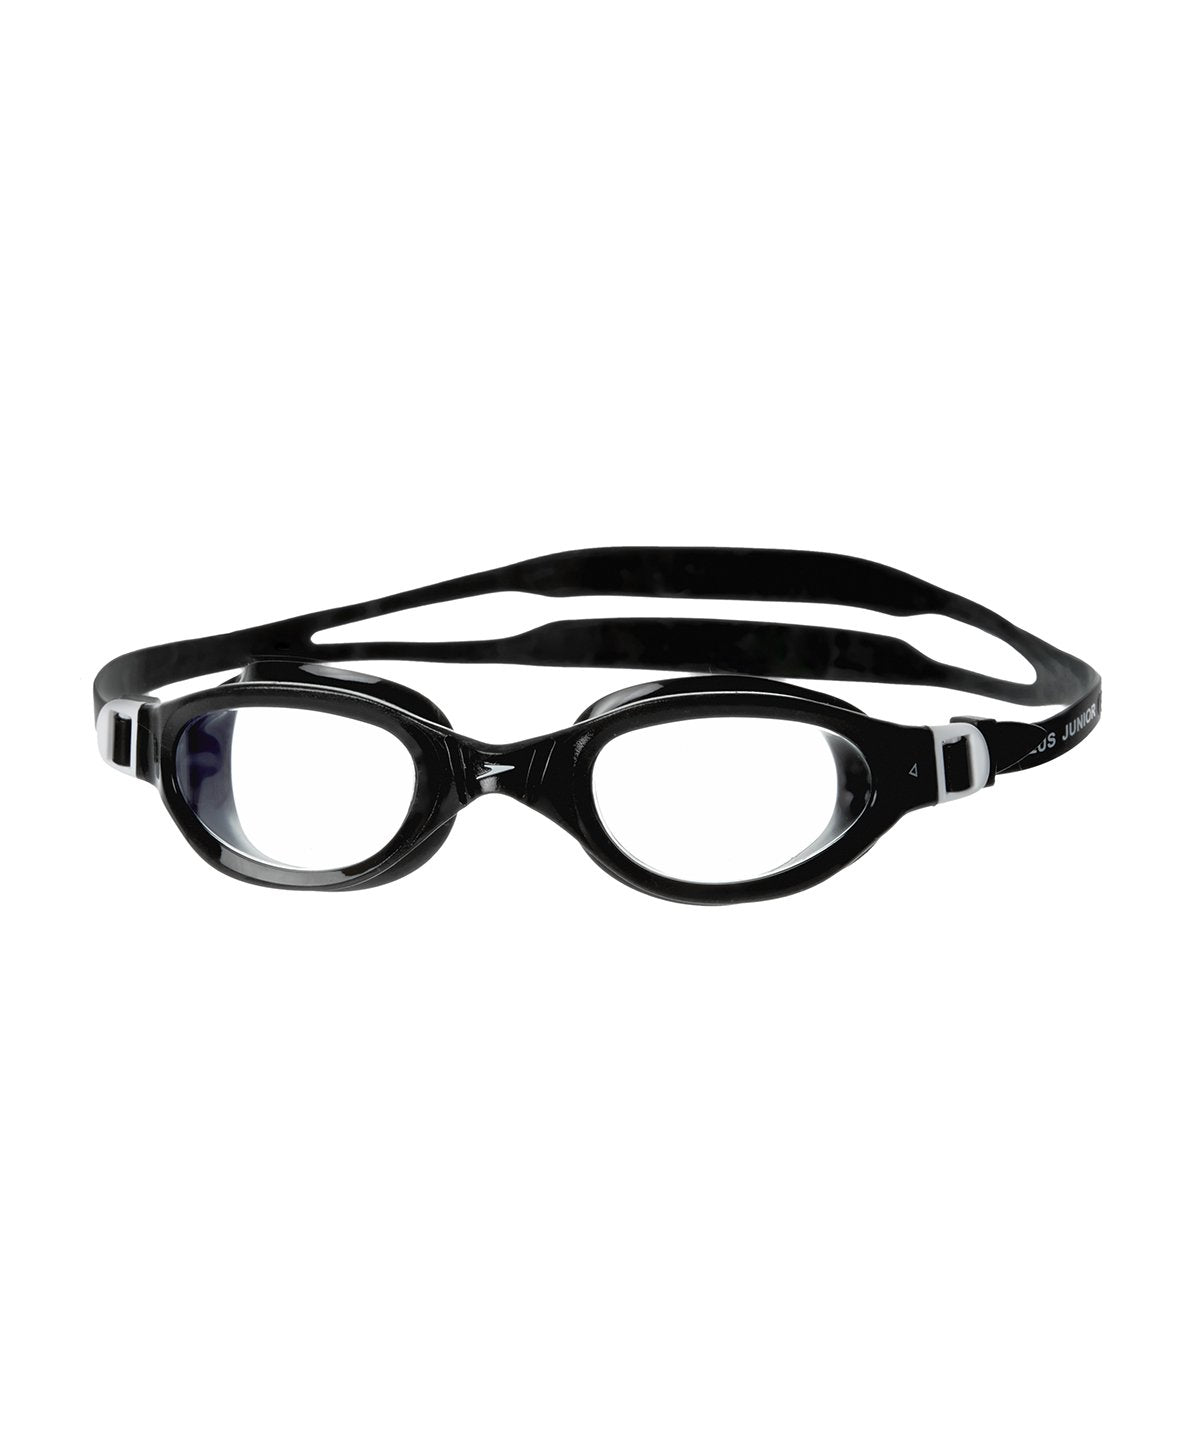 Speedo Unisex-Adult Futura Plus Goggles (Black/Clear) - Best Price online Prokicksports.com